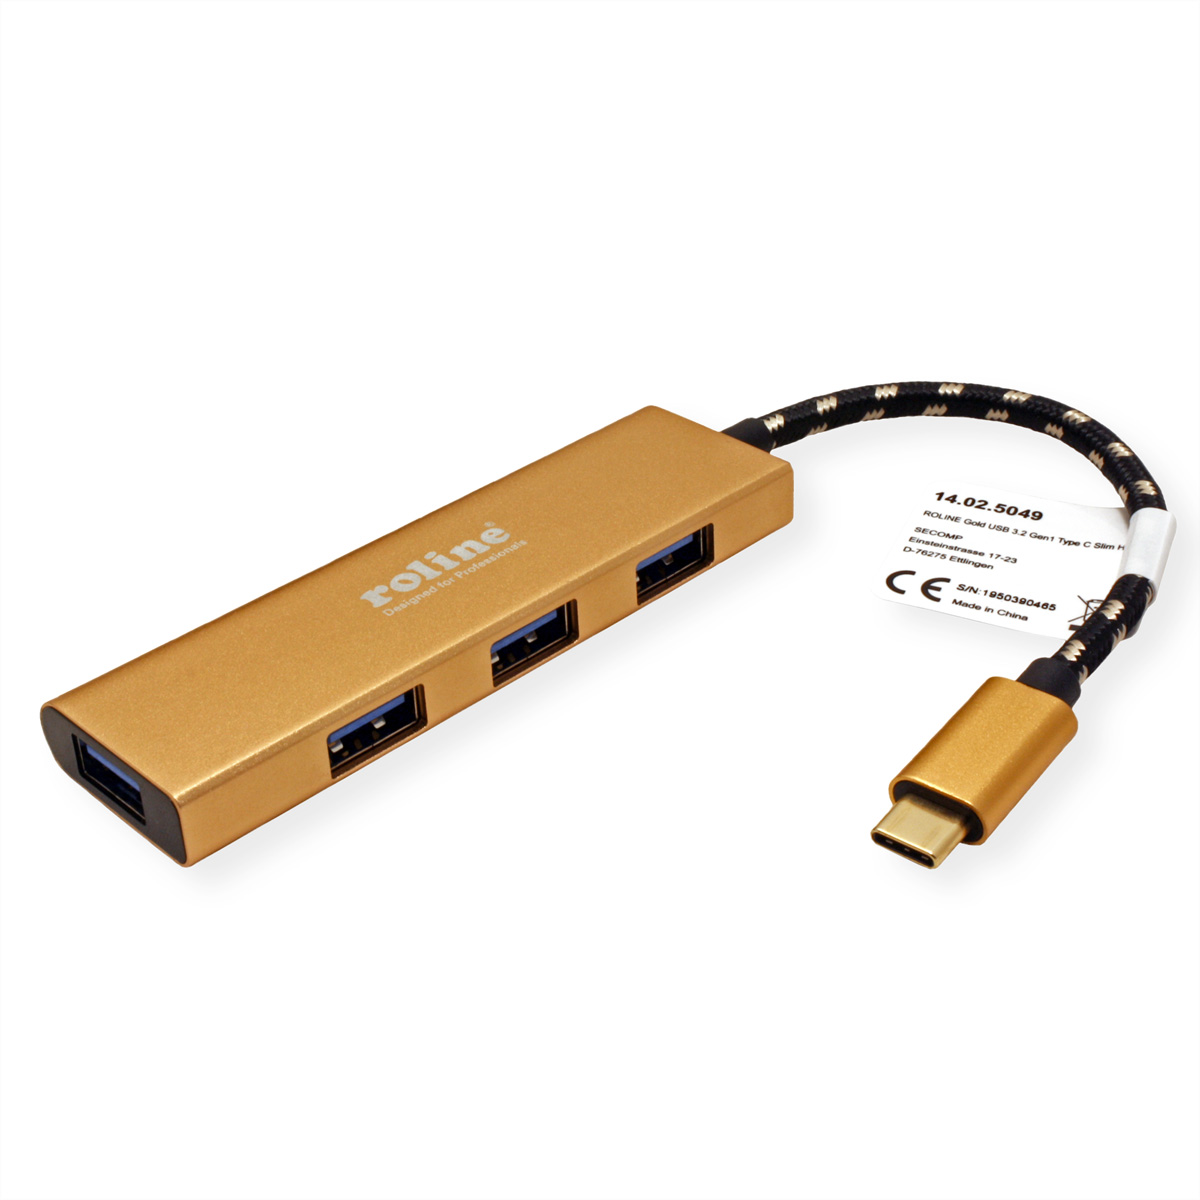 GOLD 3.2 USB goldfarben Hub, USB Gen Typ 1 Hub, ROLINE 4fach, Anschlusskabel, C